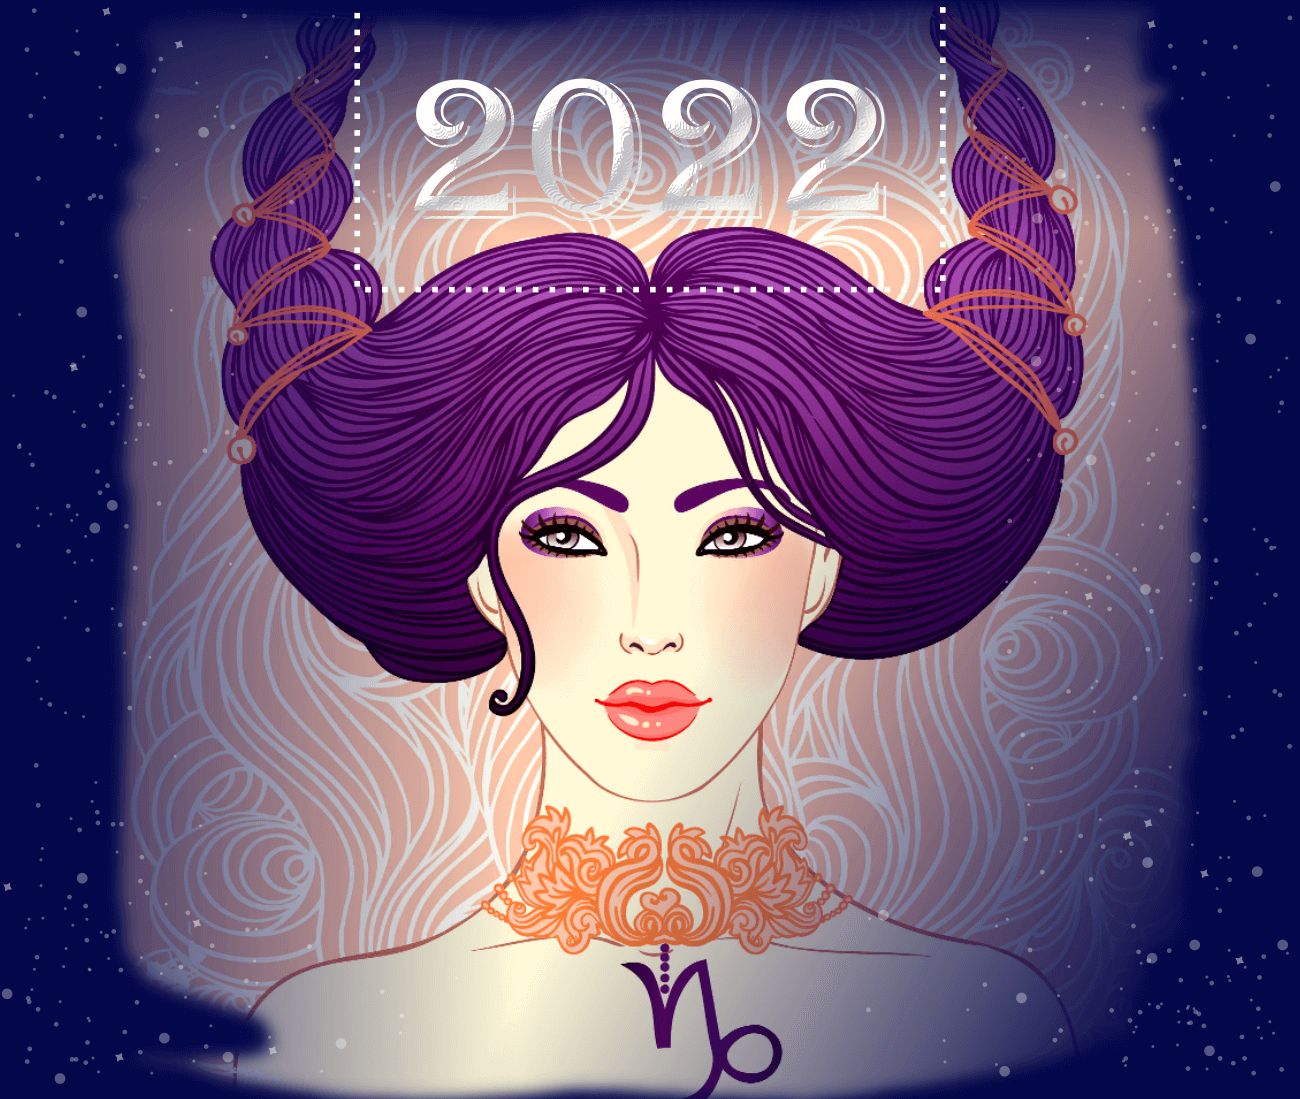 Horoscope Capricorn 2022